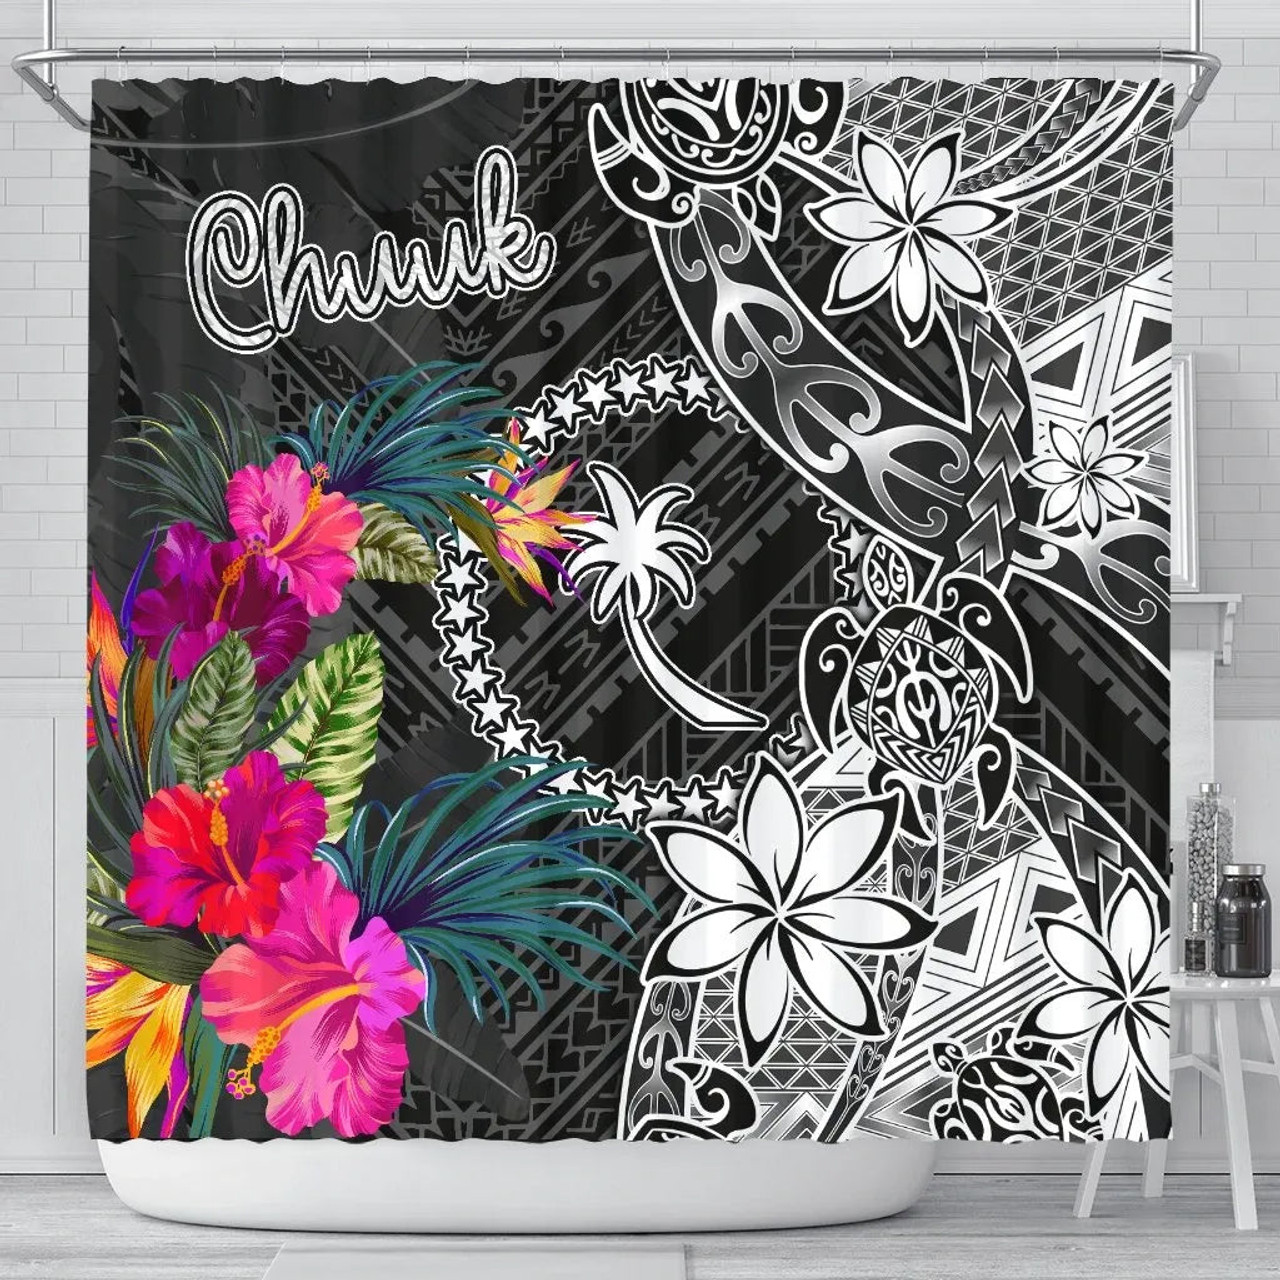 Chuuk Shower Curtain - Turtle Floral 1